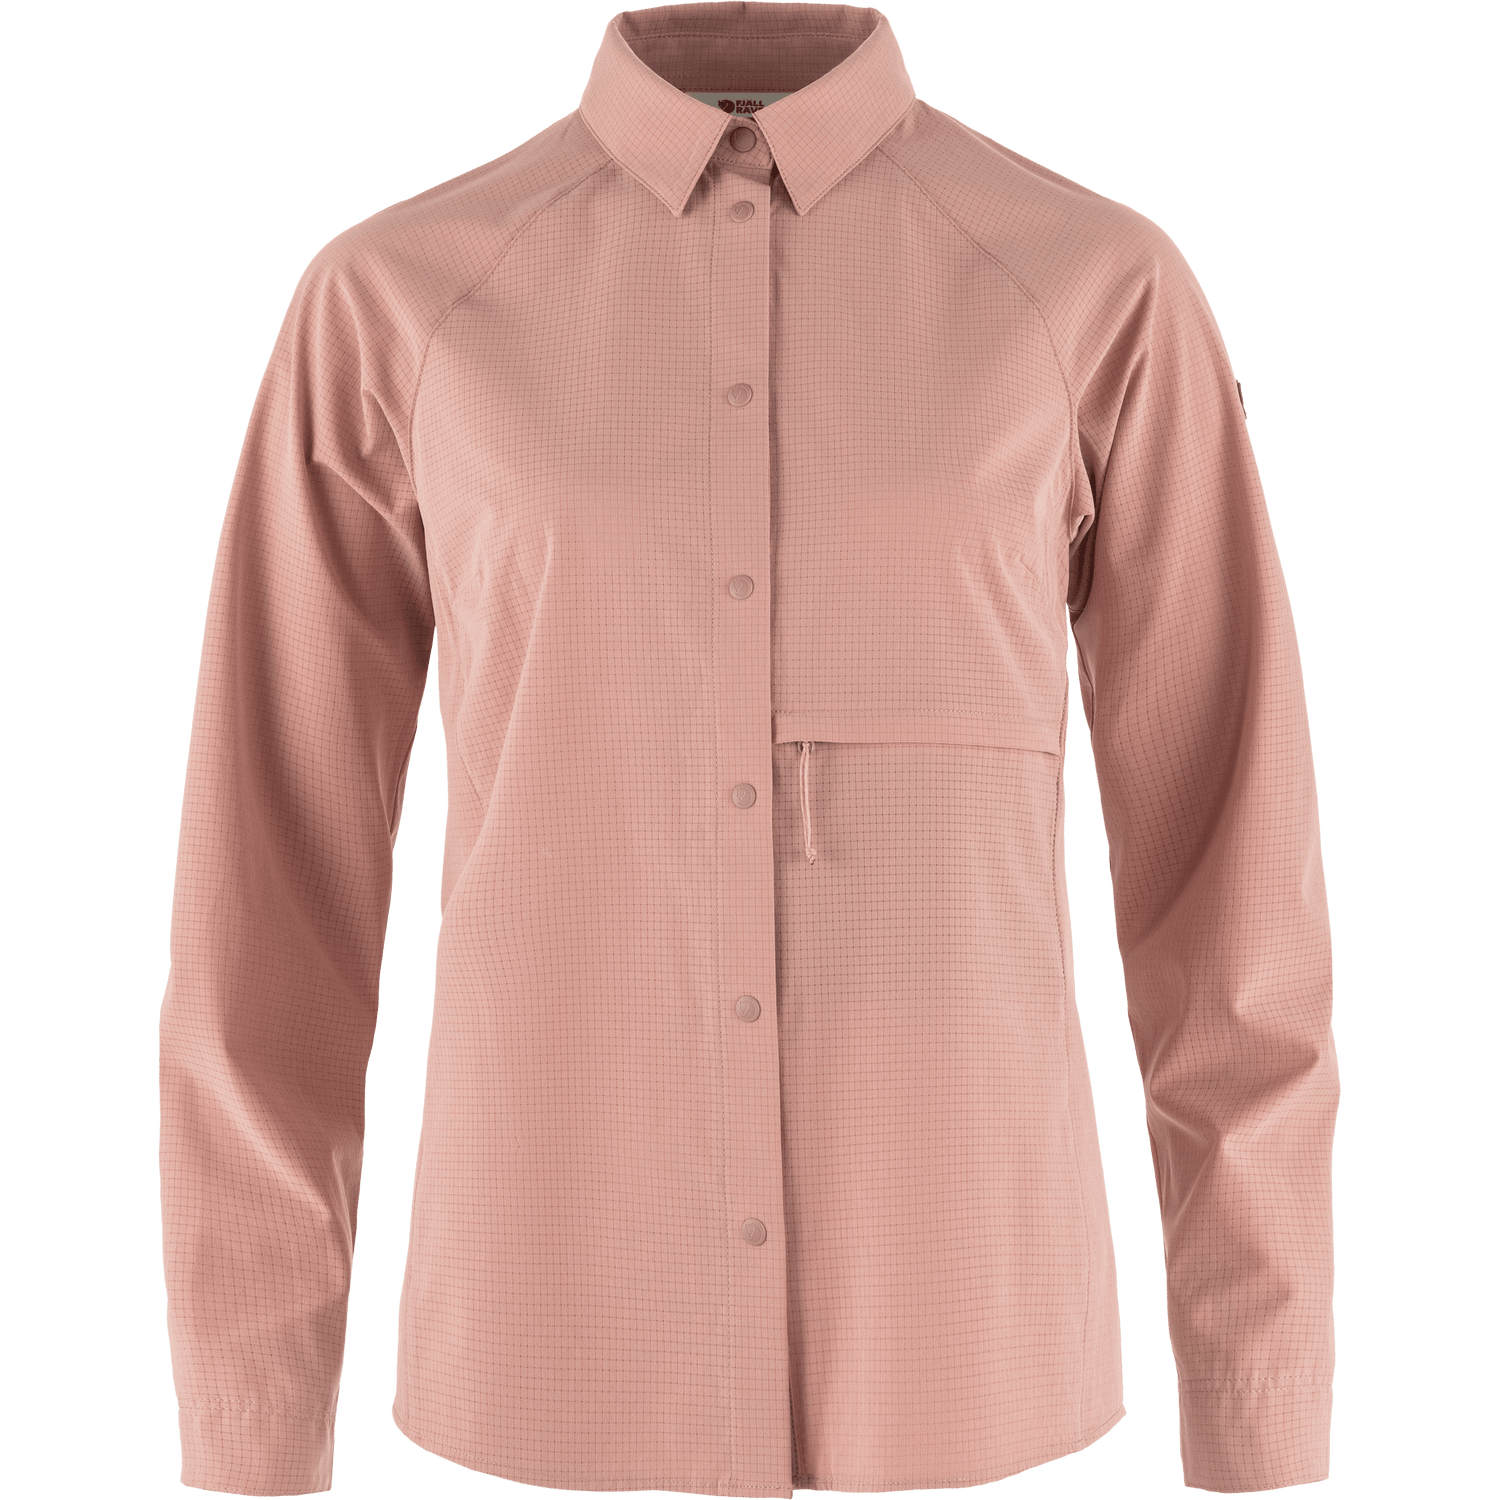 Fjällräven W's Abisko Trekking Shirt - Recycled polyester Dusty Rose Shirt